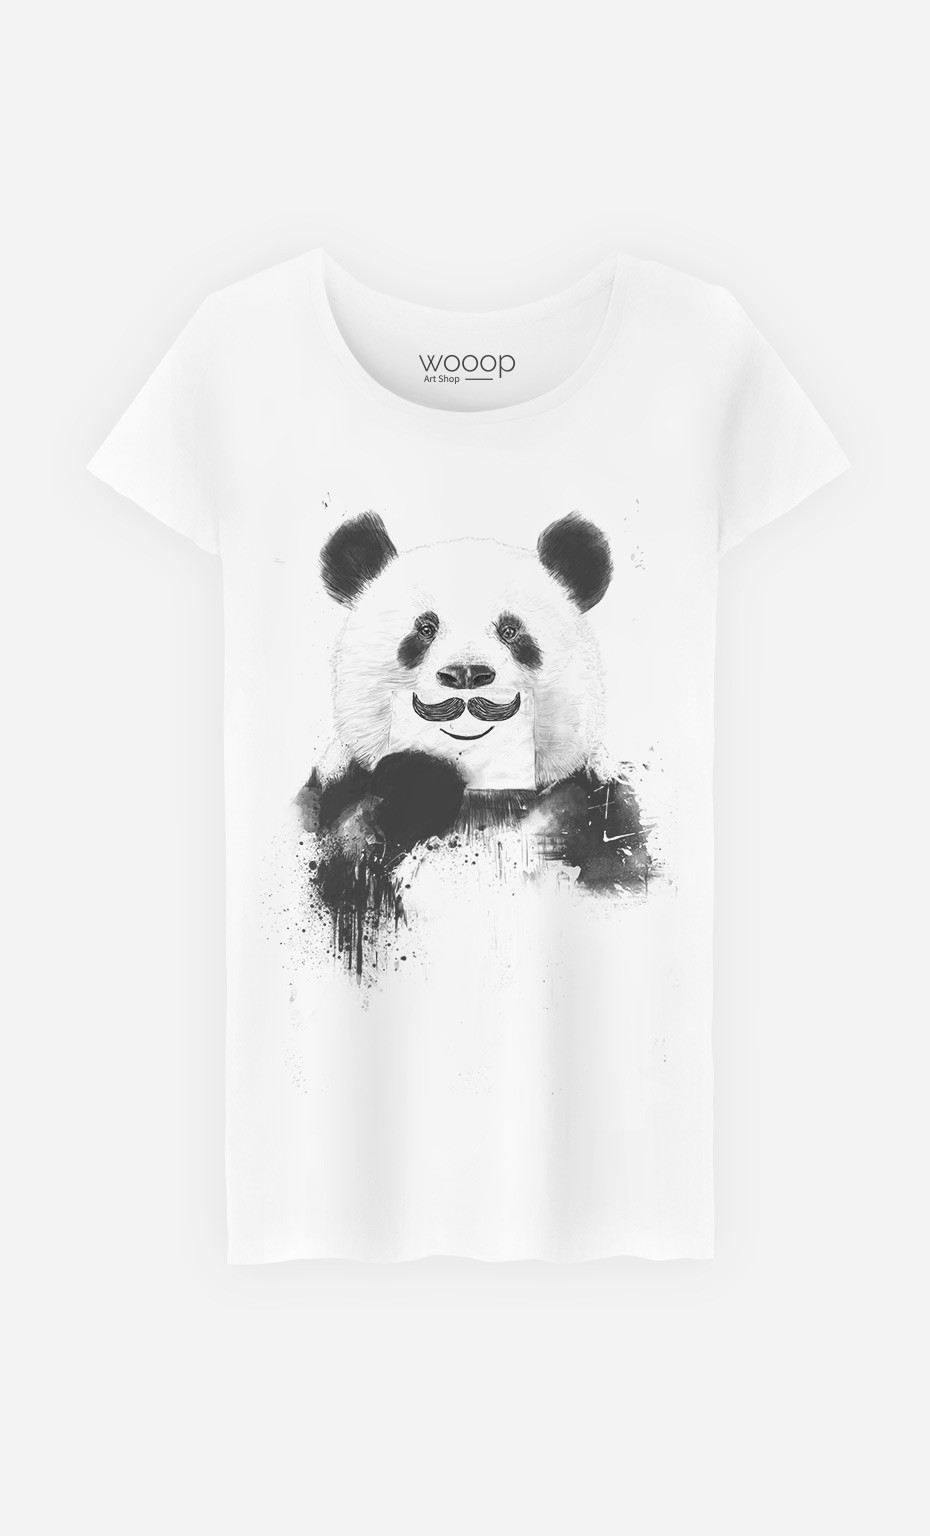 T-Shirt Funny Panda